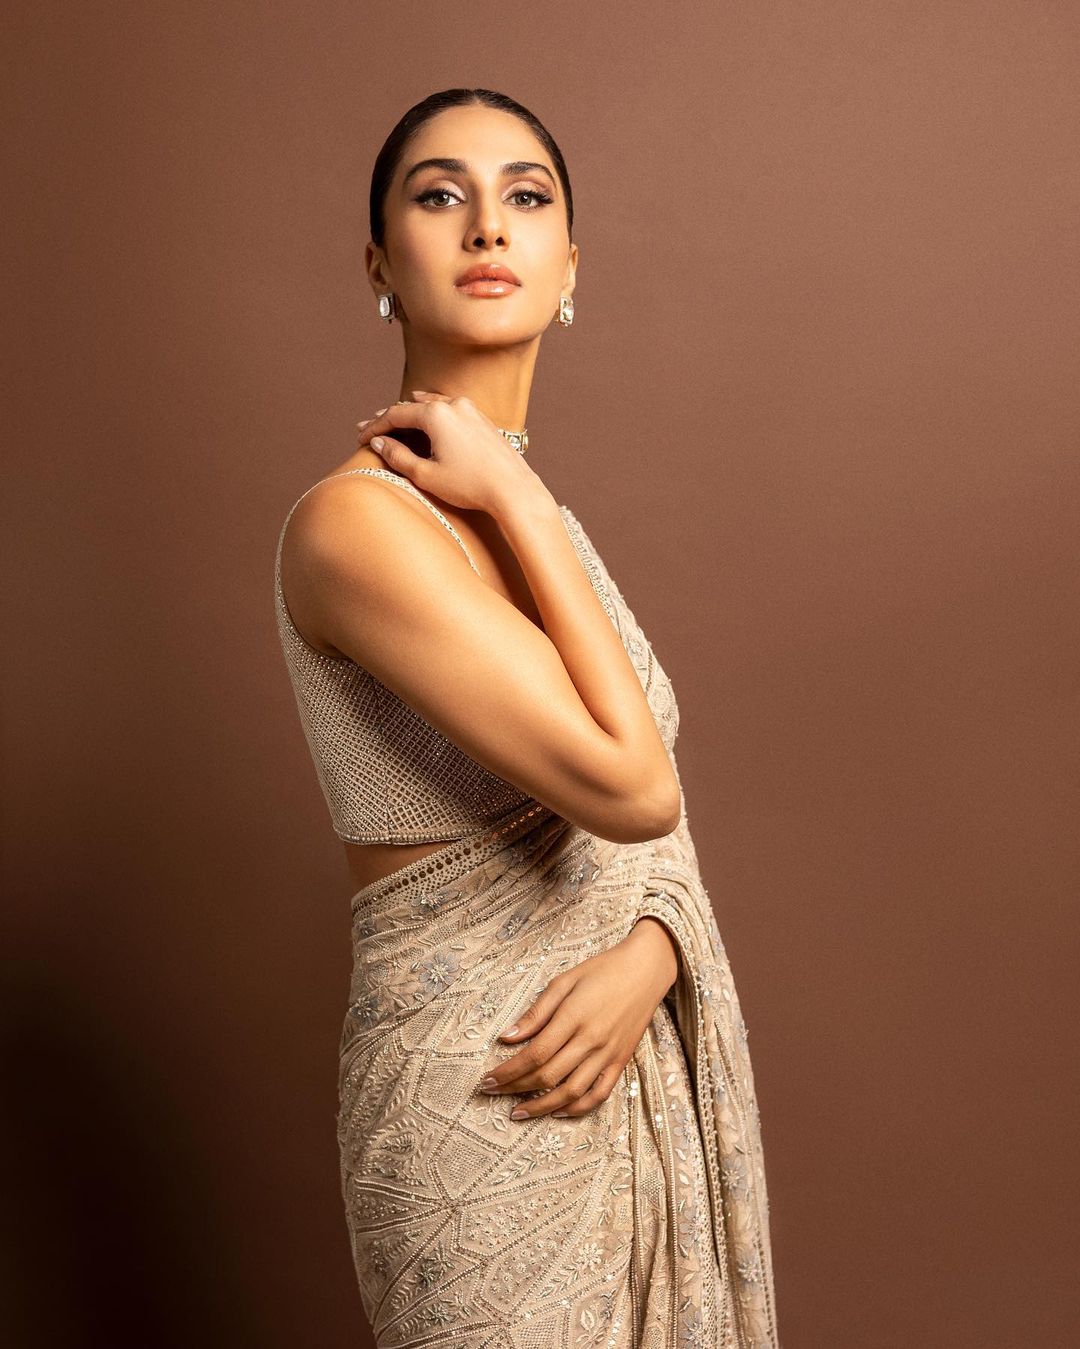 Vaani Kapoor wears Saree Designed by Tarun Tahiliani During Photoshoot, Feb 2023 3